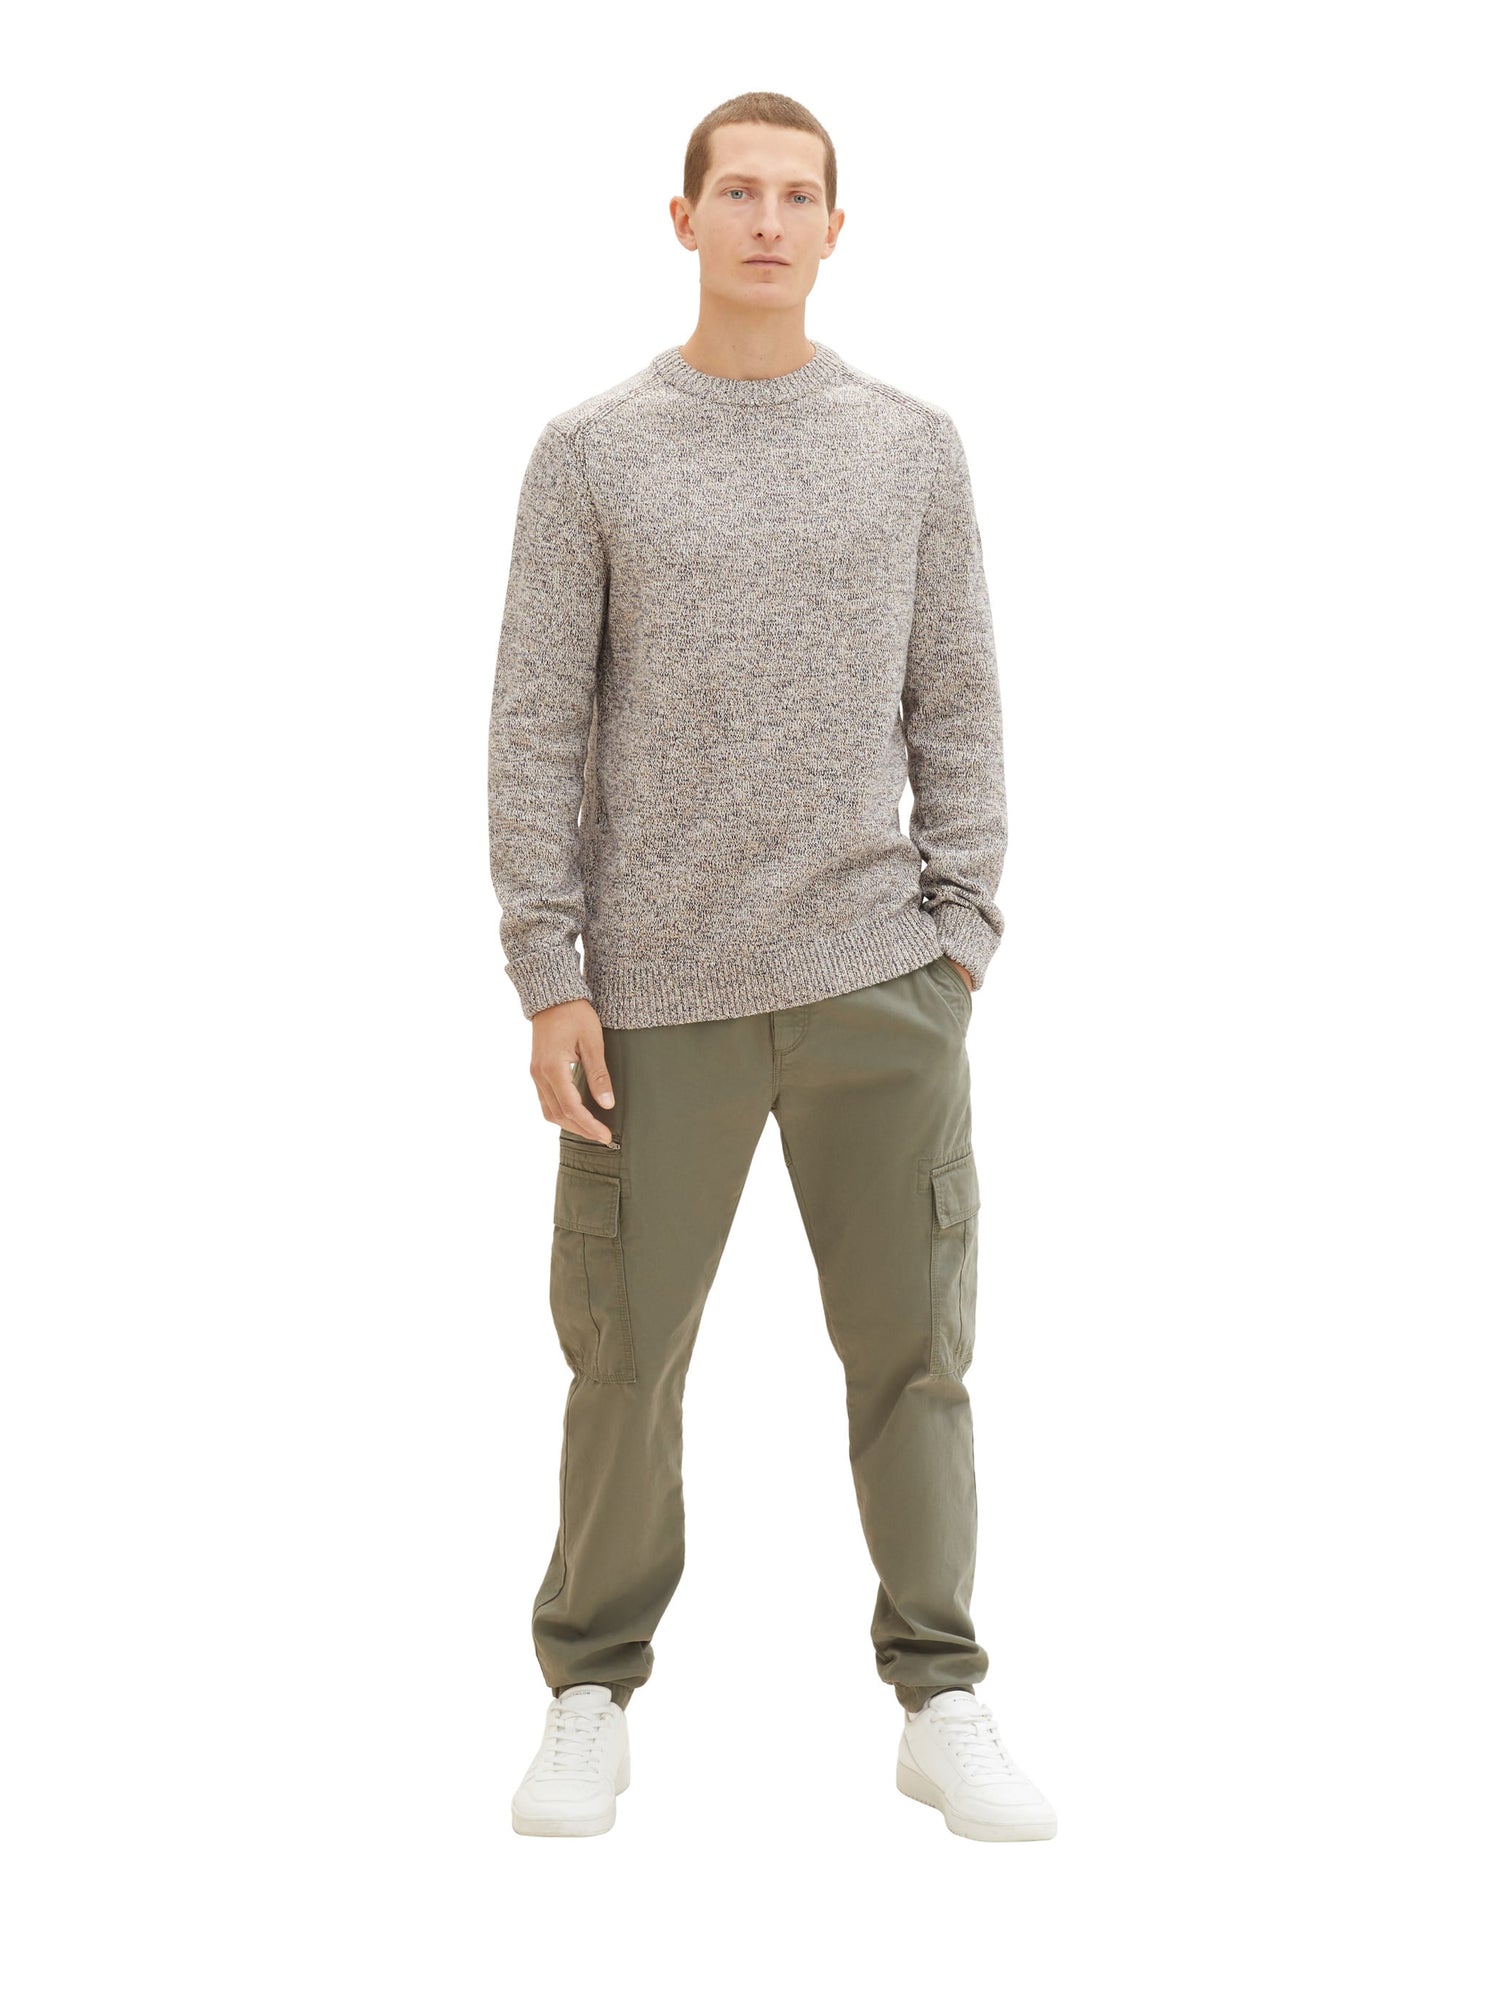 Knitted Sweater With Round Neckline_1038246_32742_06